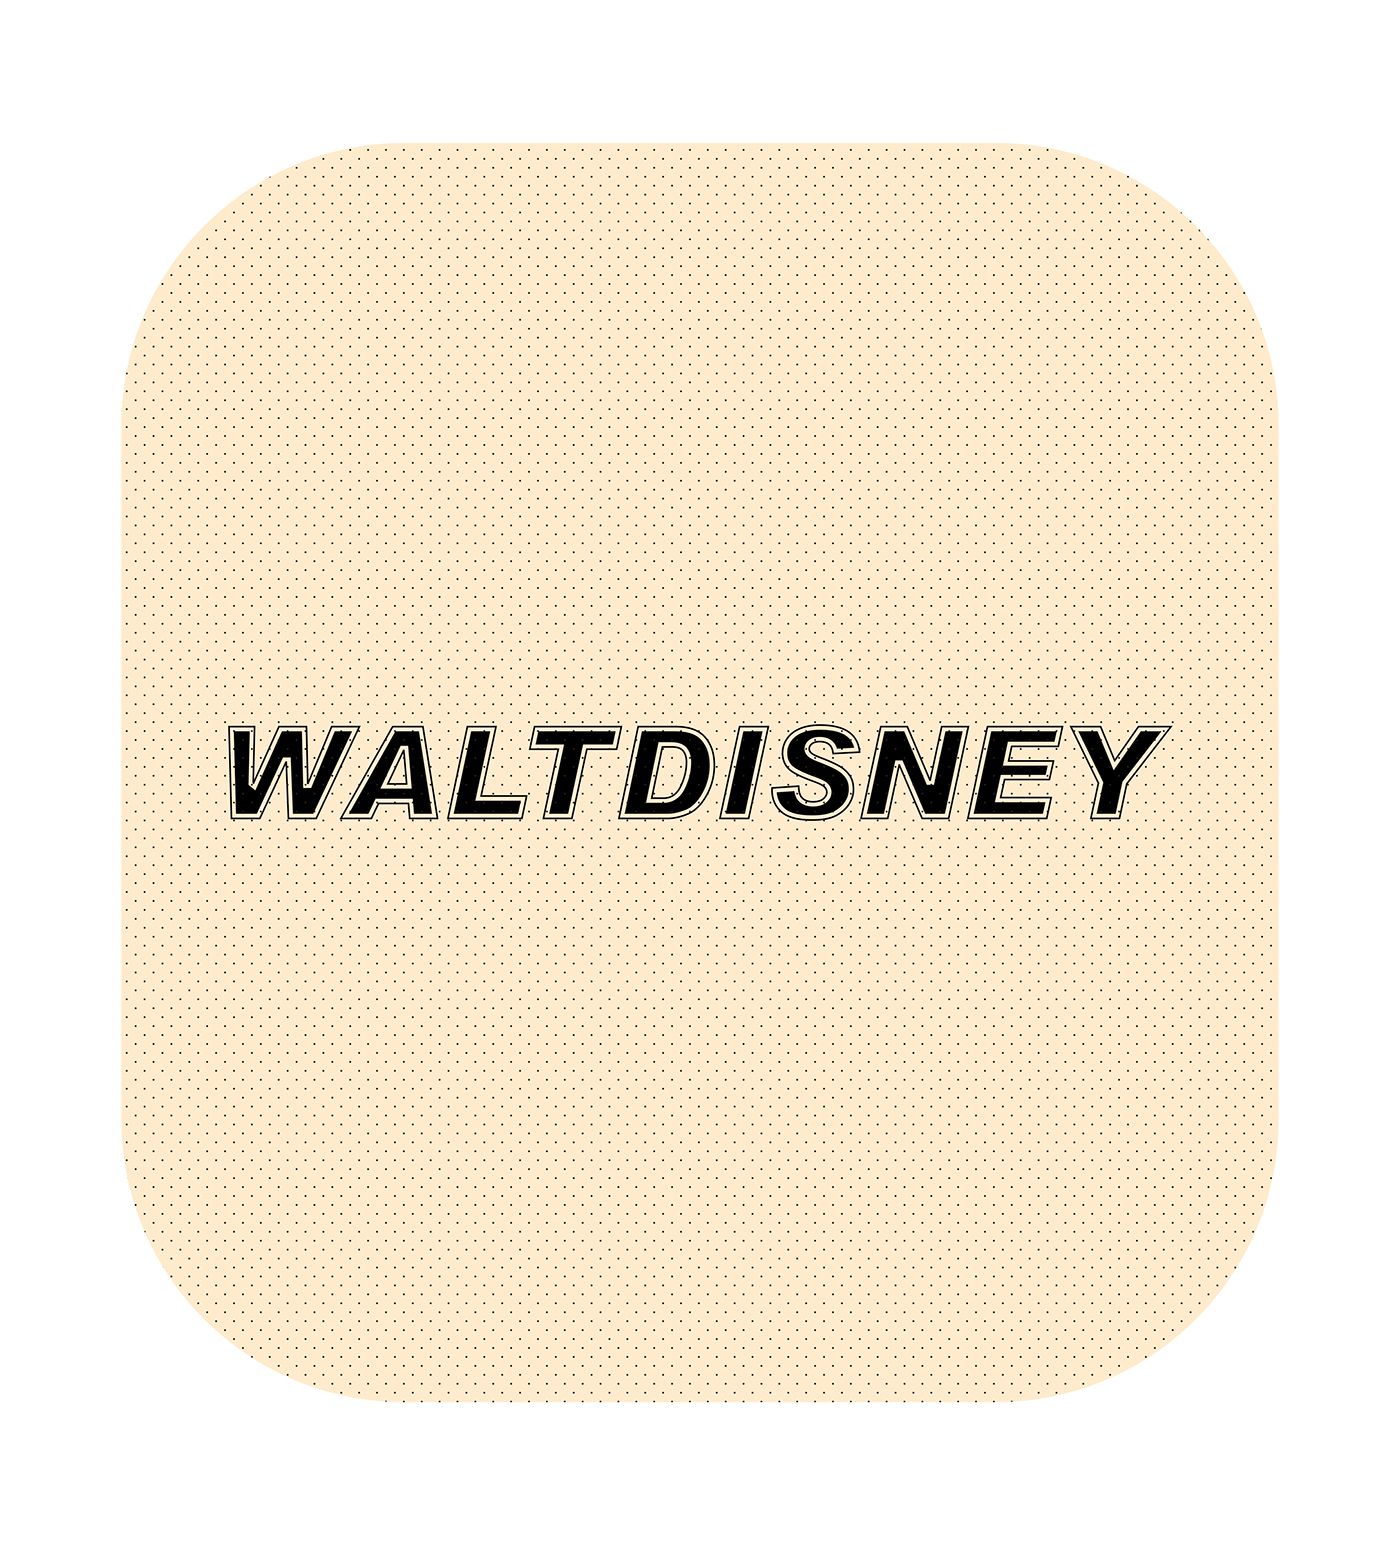 waltdisney animation  waltdisneystudios cartoon mickymouse donaldduck conceptillustration concept ILLUSTRATION  gstro